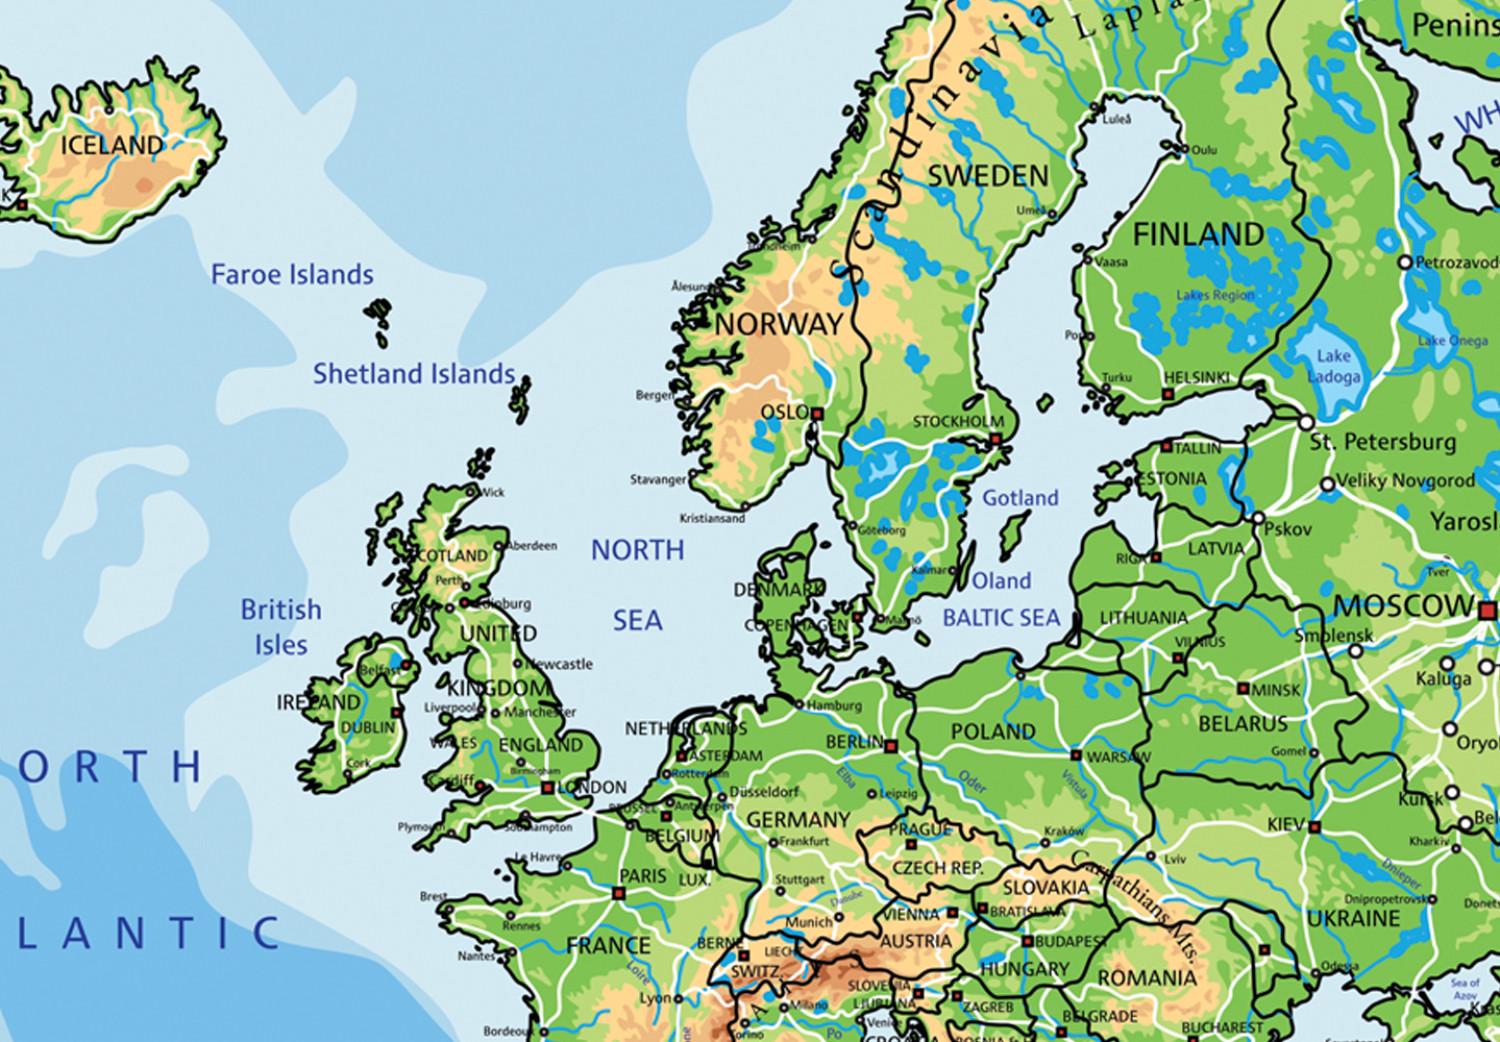 Decoración en corcho World Geography [Cork Map]